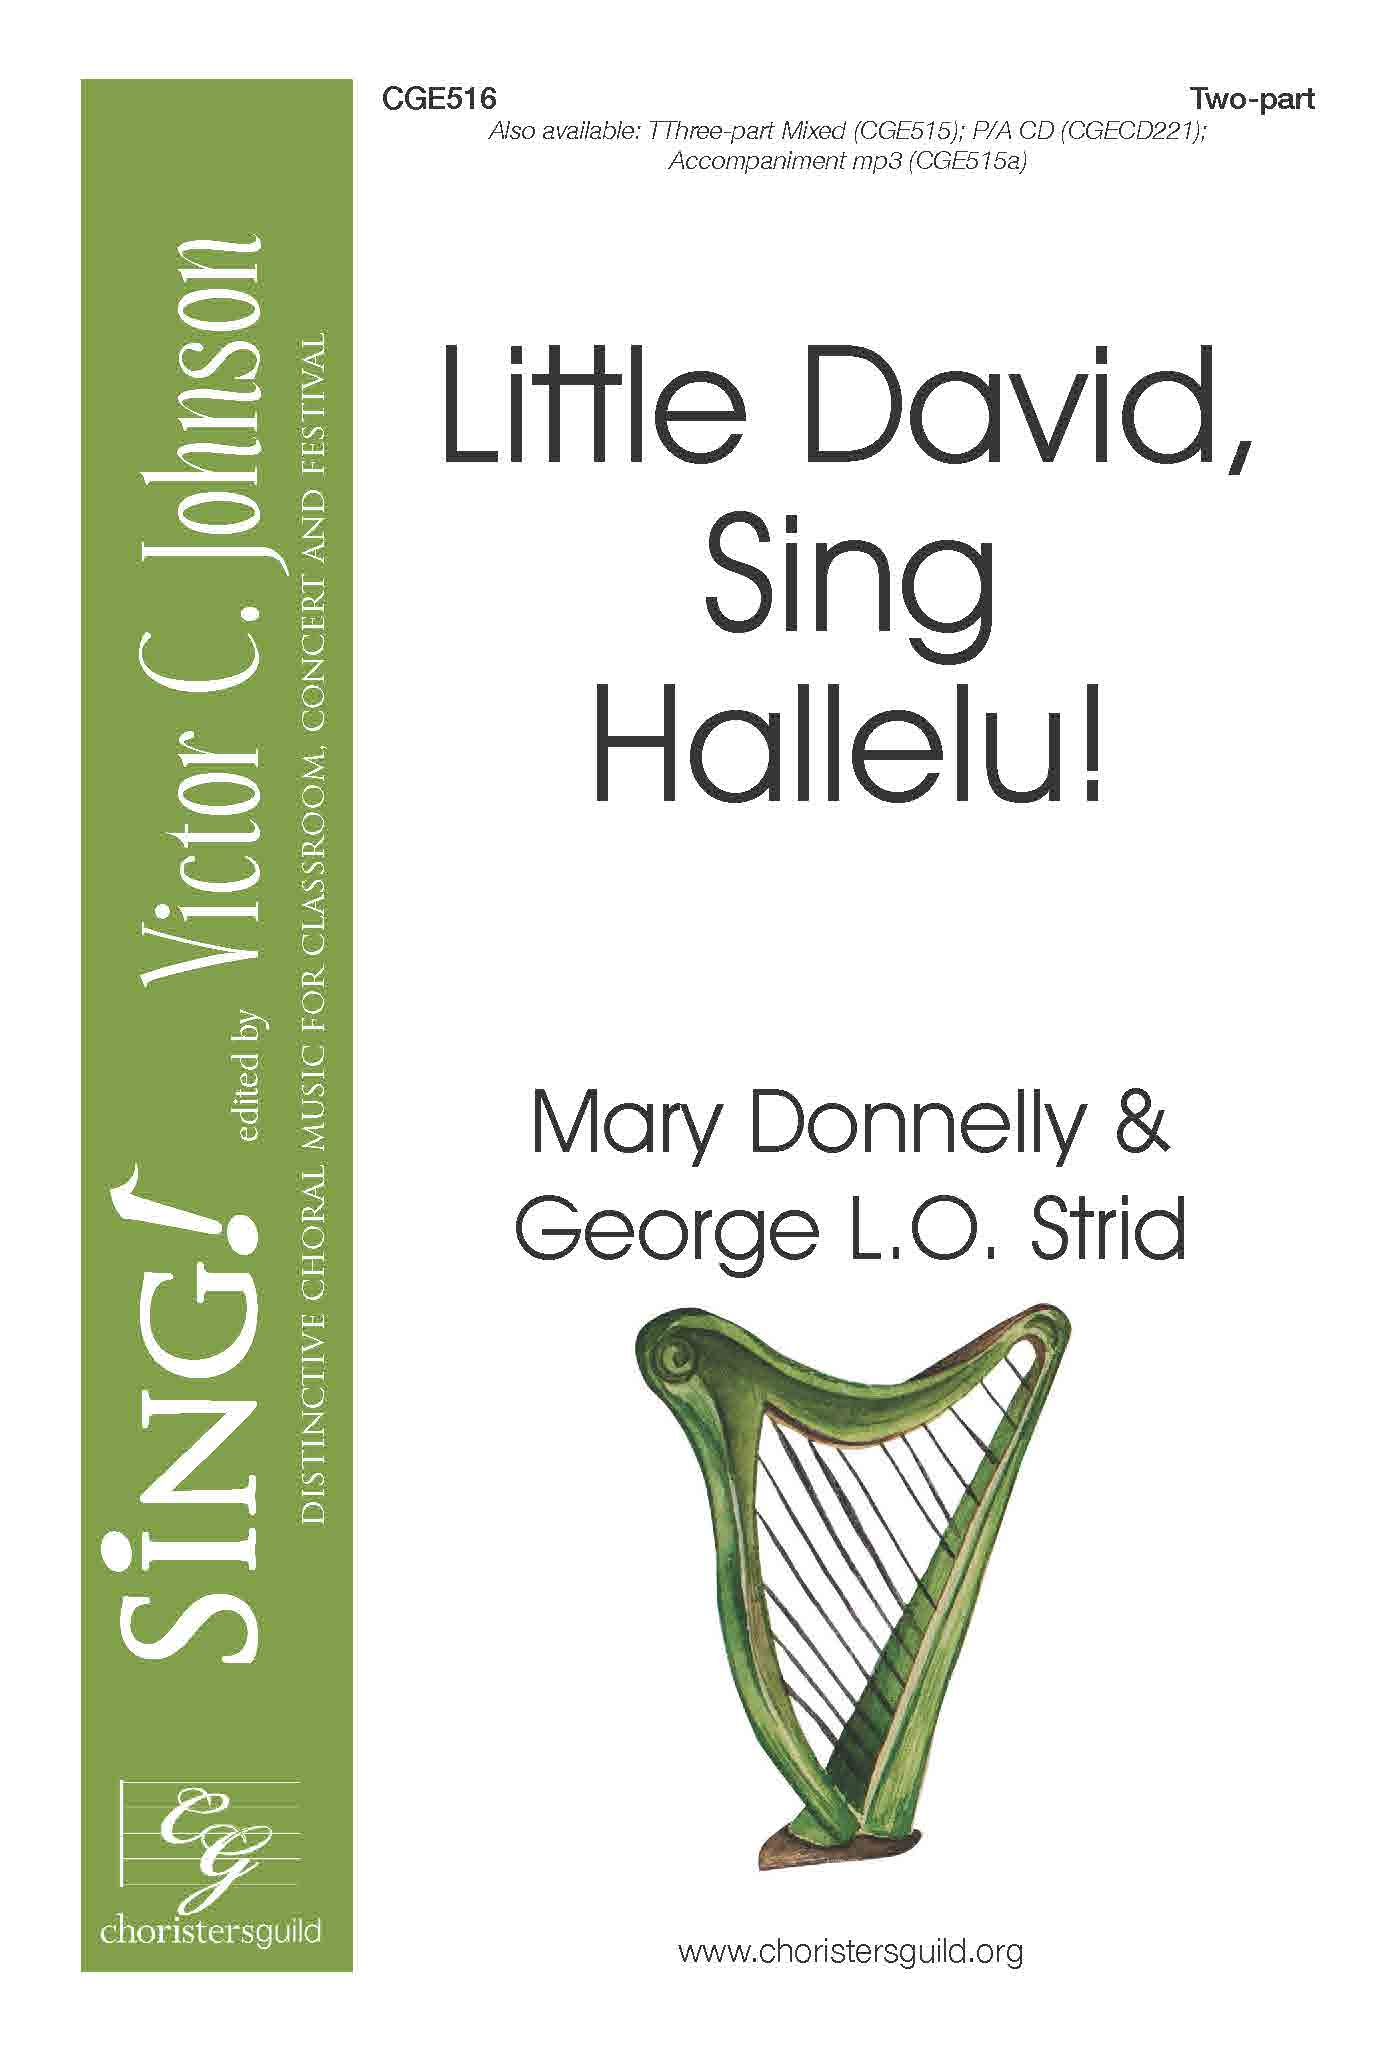 Little David, Sing Hallelu! - Two-part